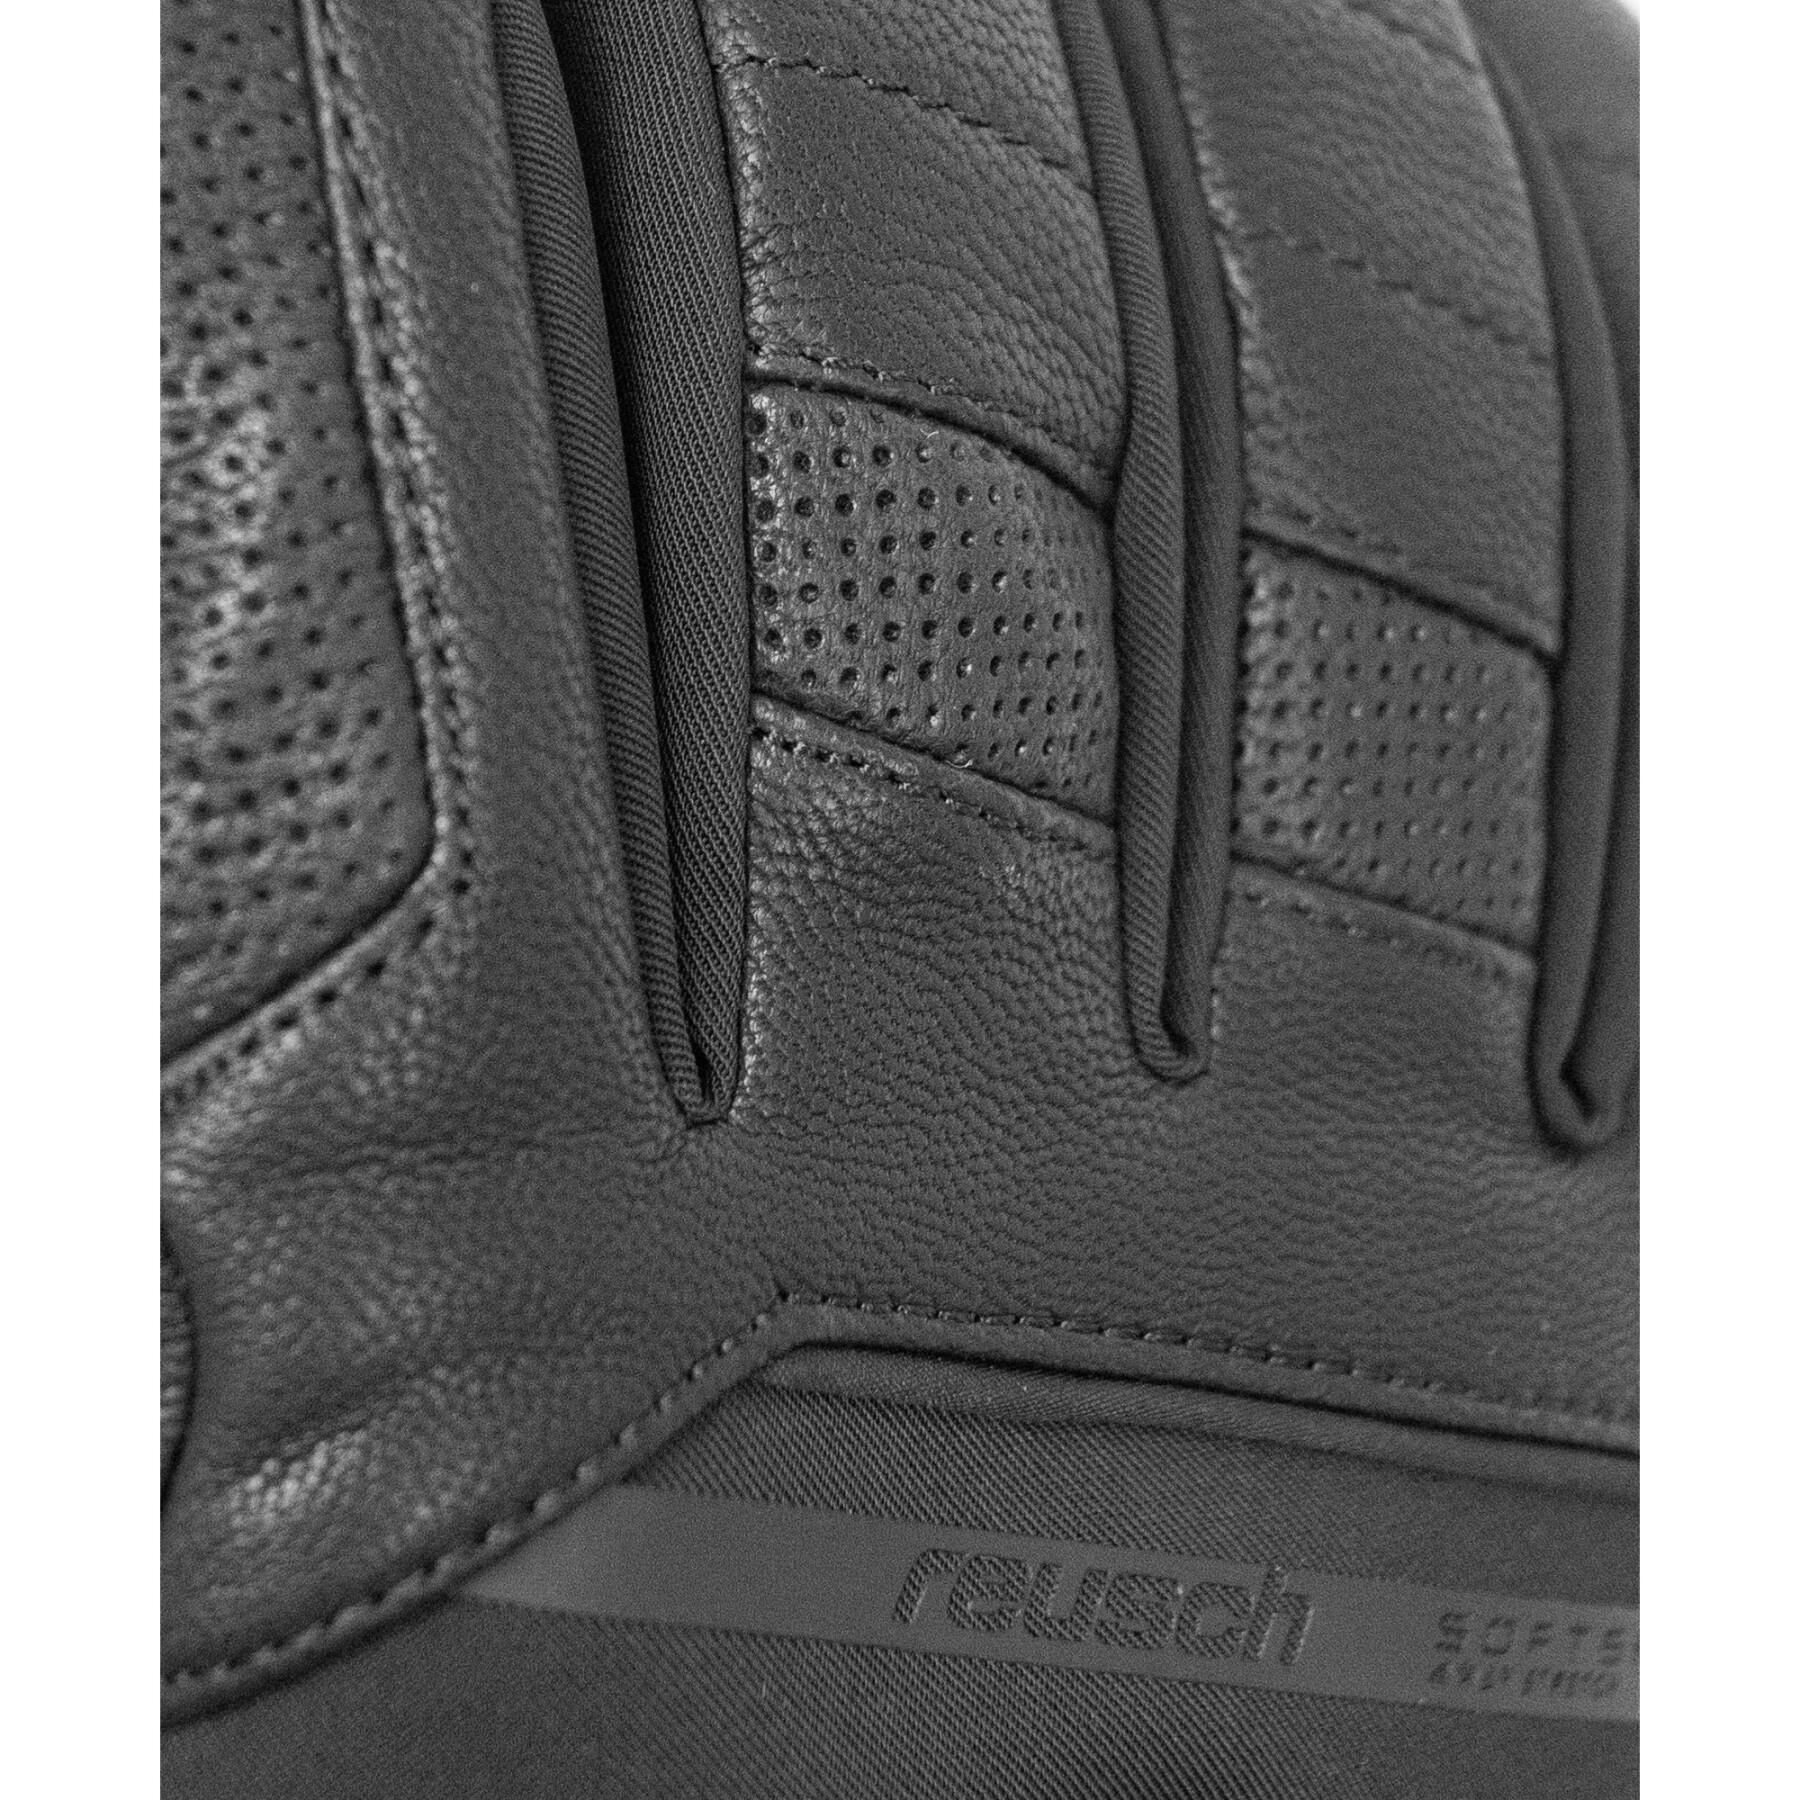 Gloves Reusch Icarus GTX